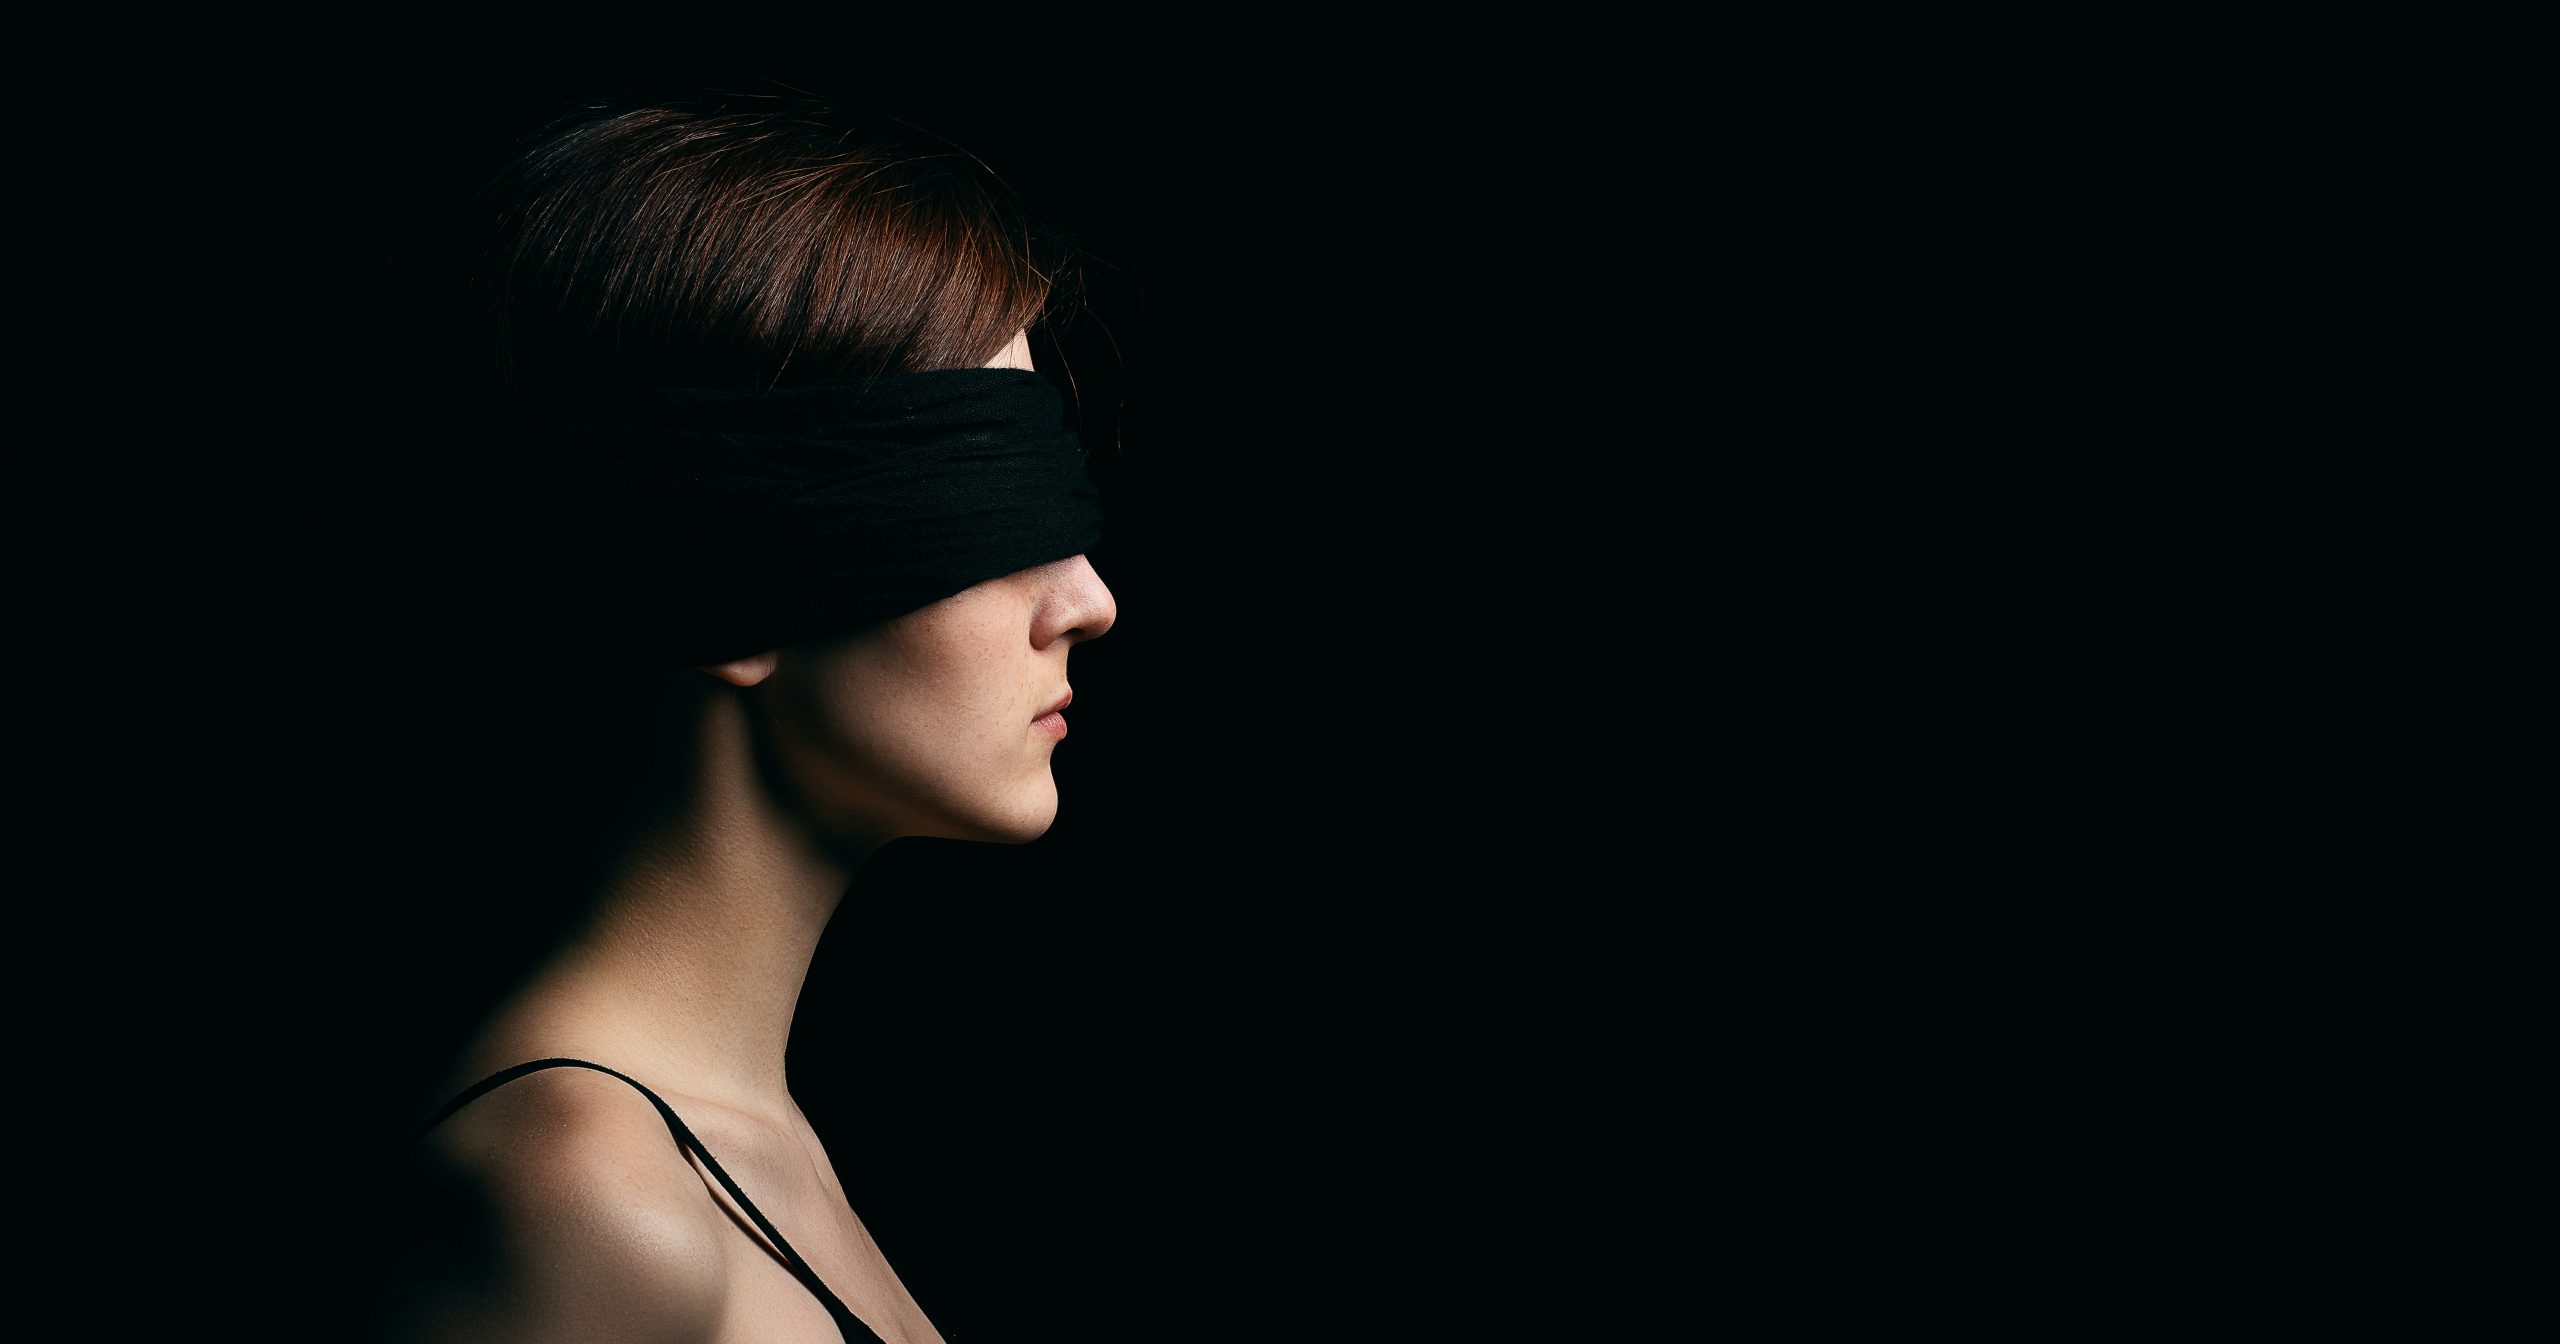 A blindfolded woman against a dark background. (Photo by Kirill Balobanov via Unsplash.)